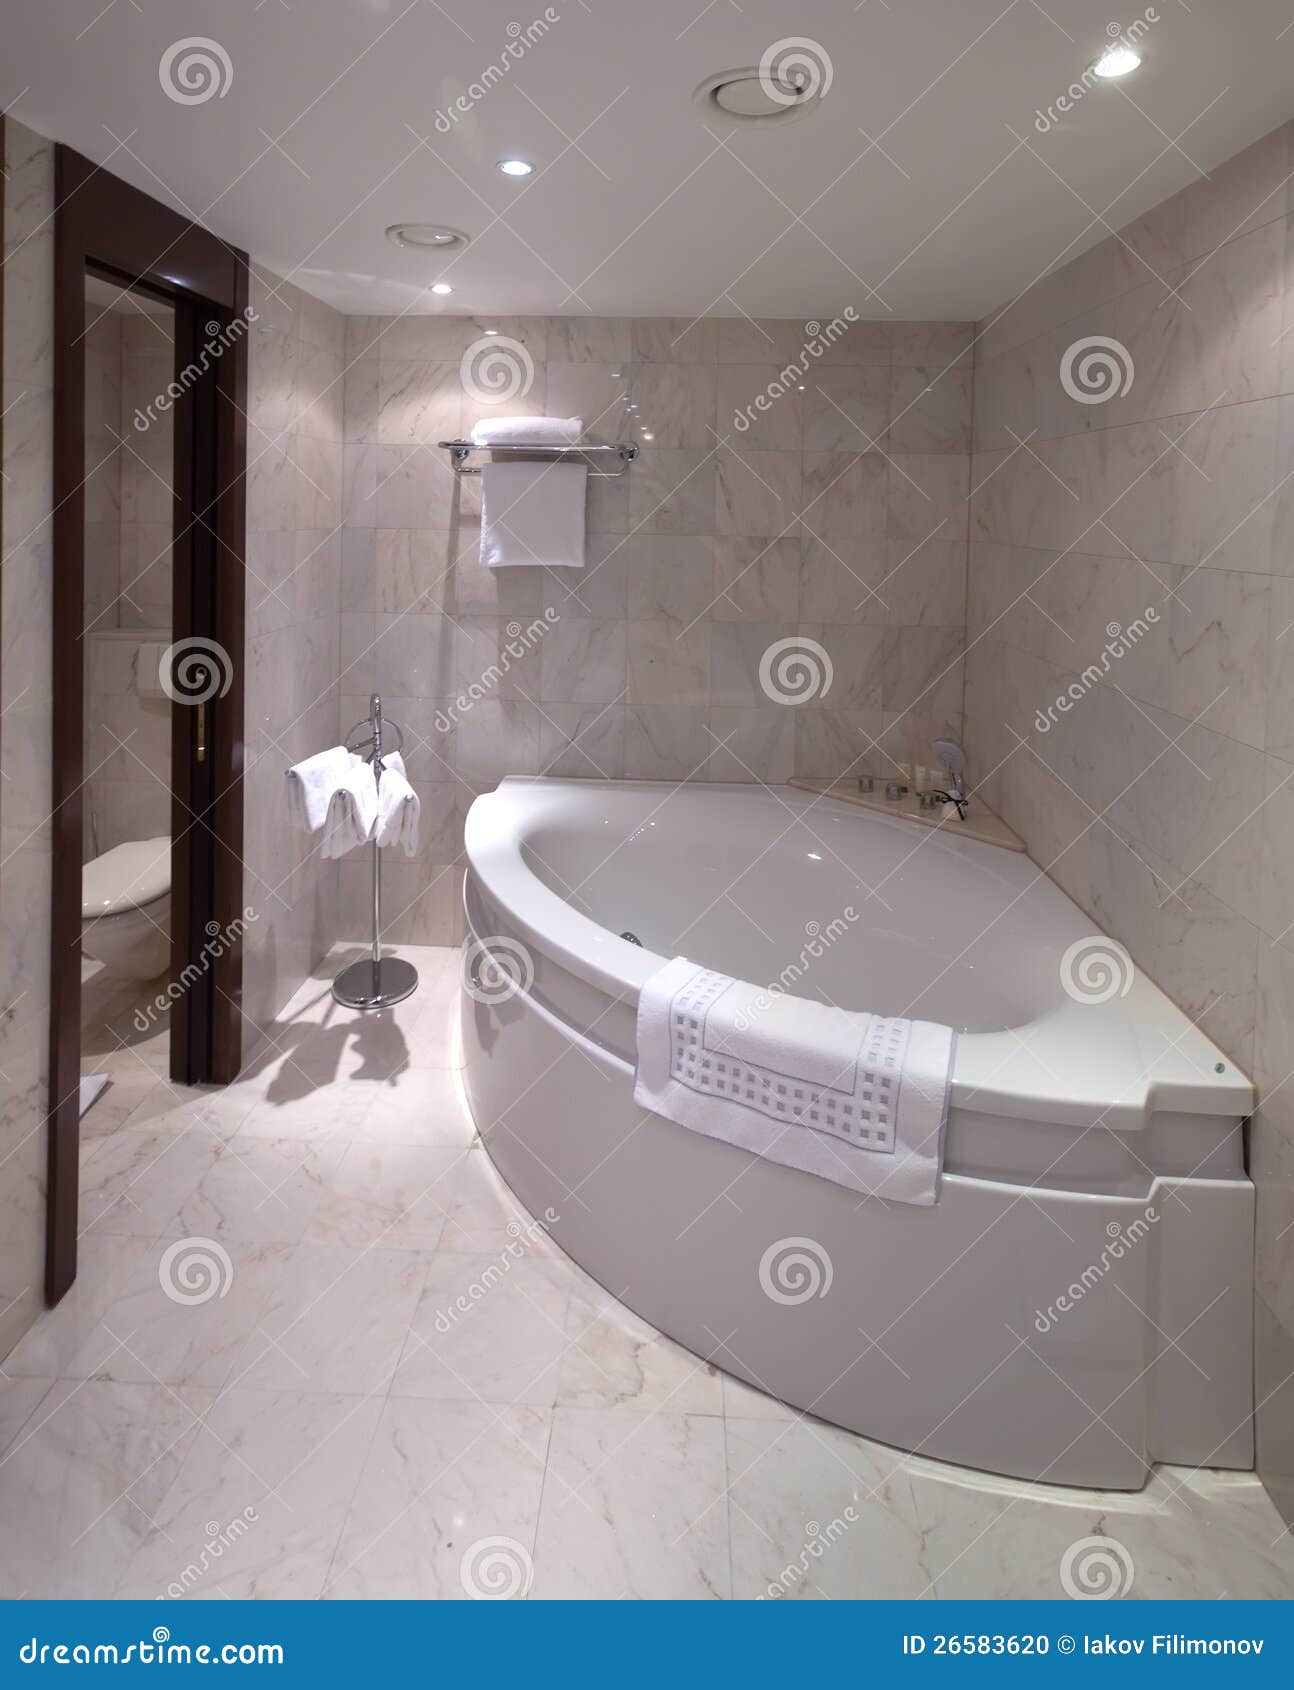 Ванная комната полукругом